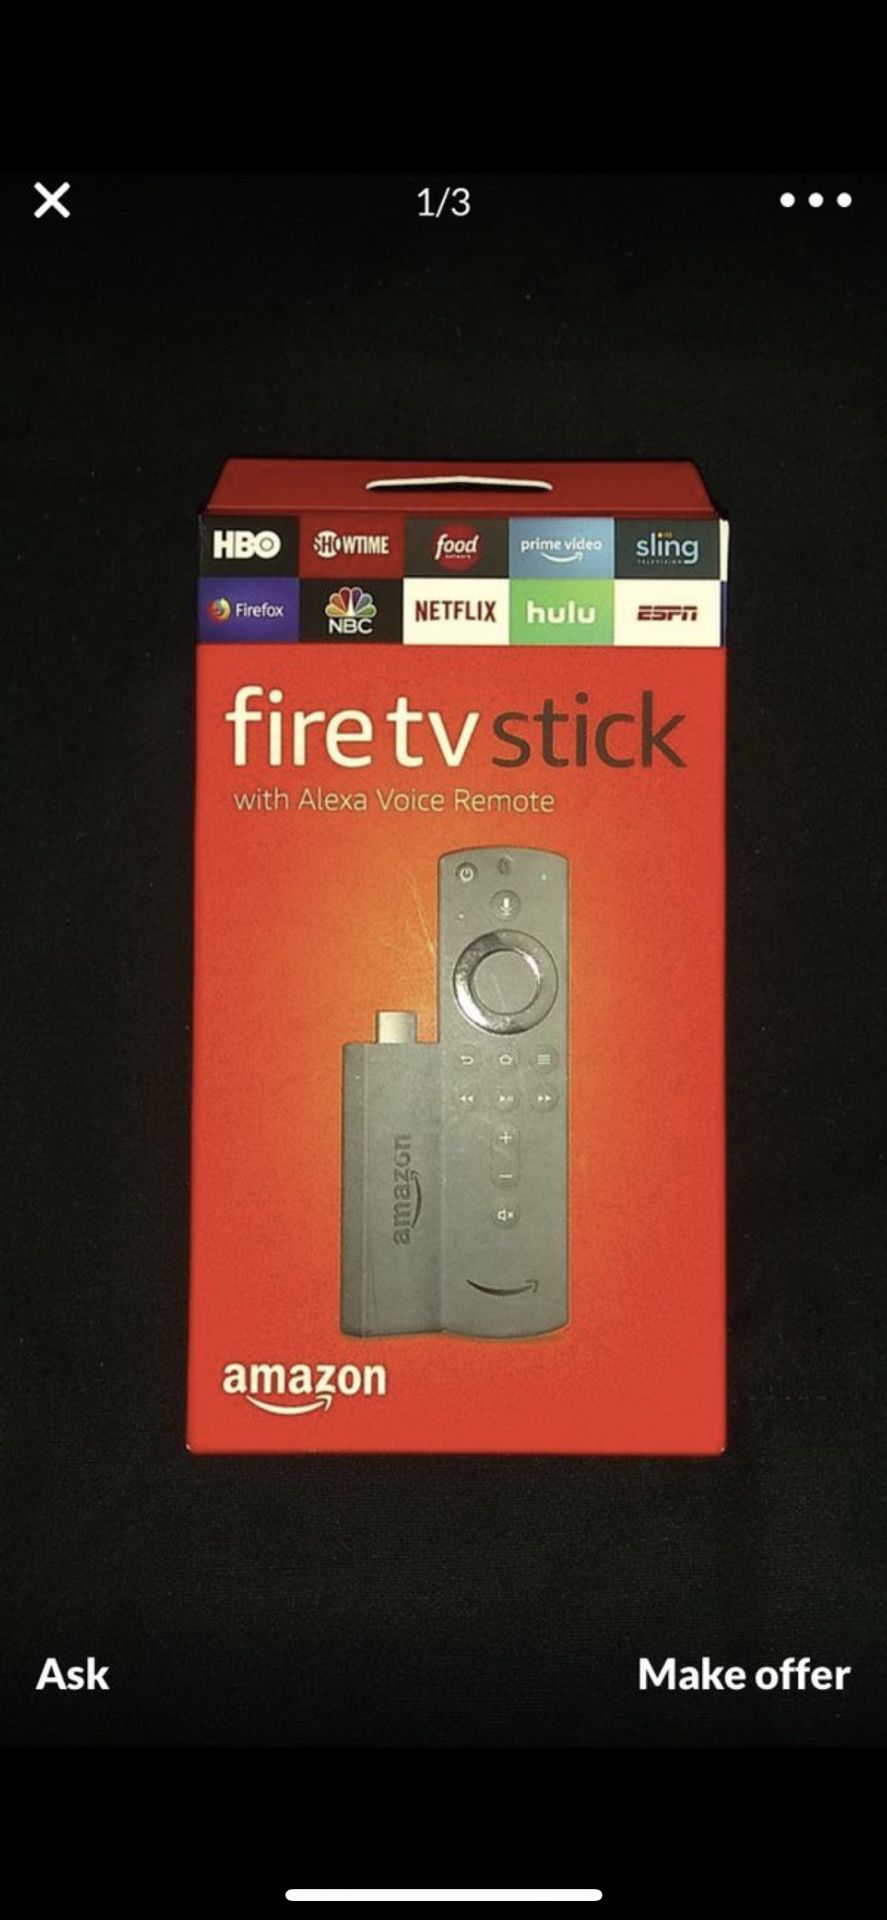 Amazon fire tv stick with Alexa voice remote $25